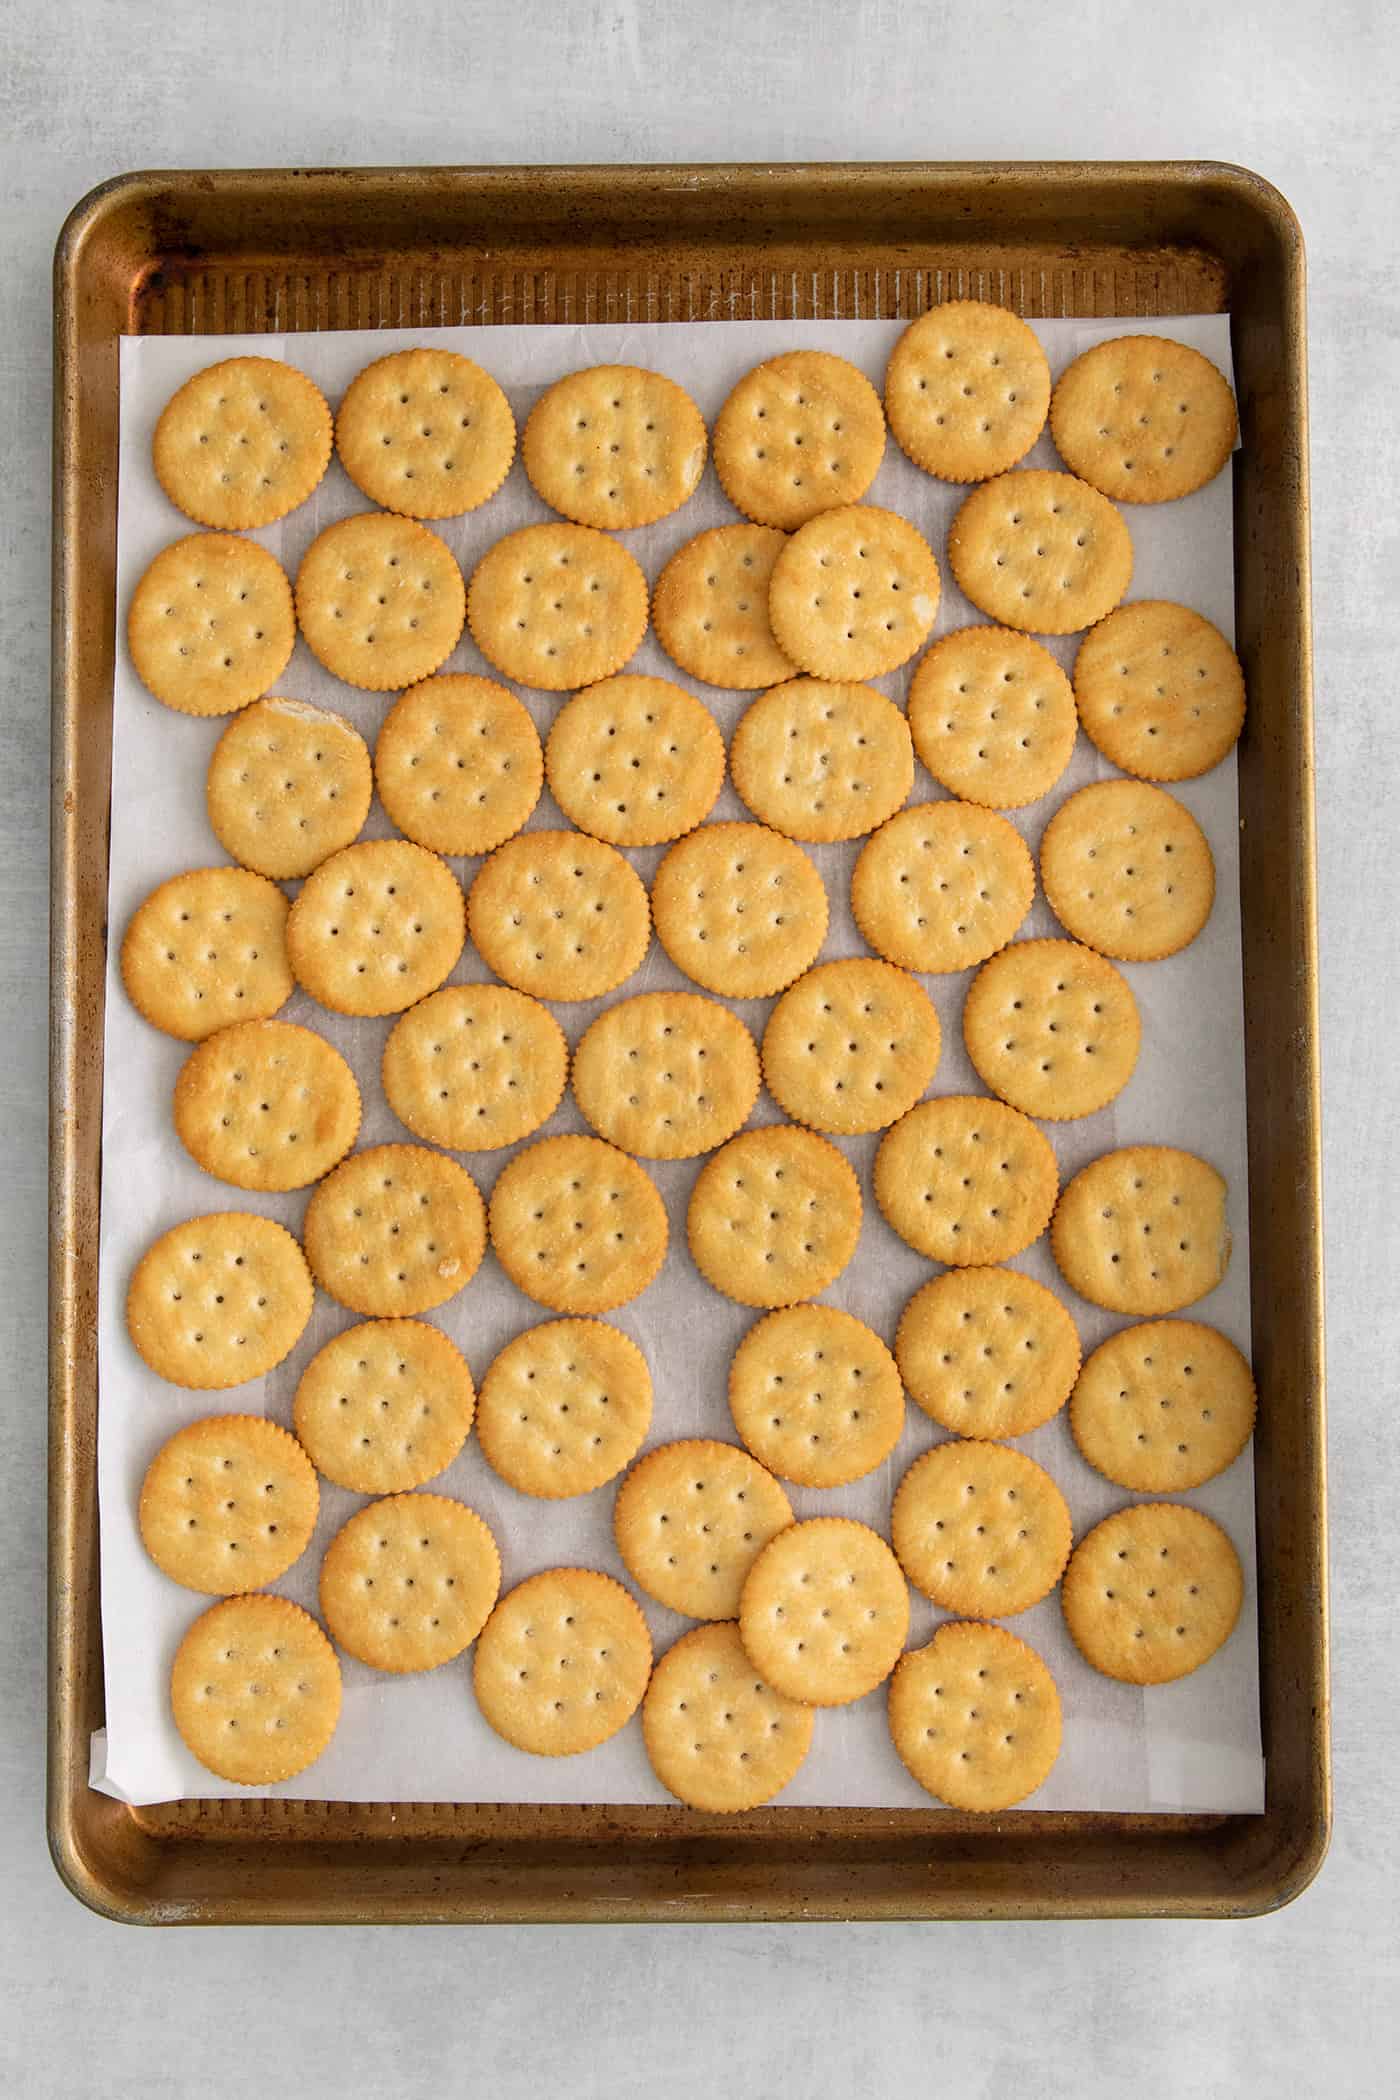 Ritz crackers on a baking sheet